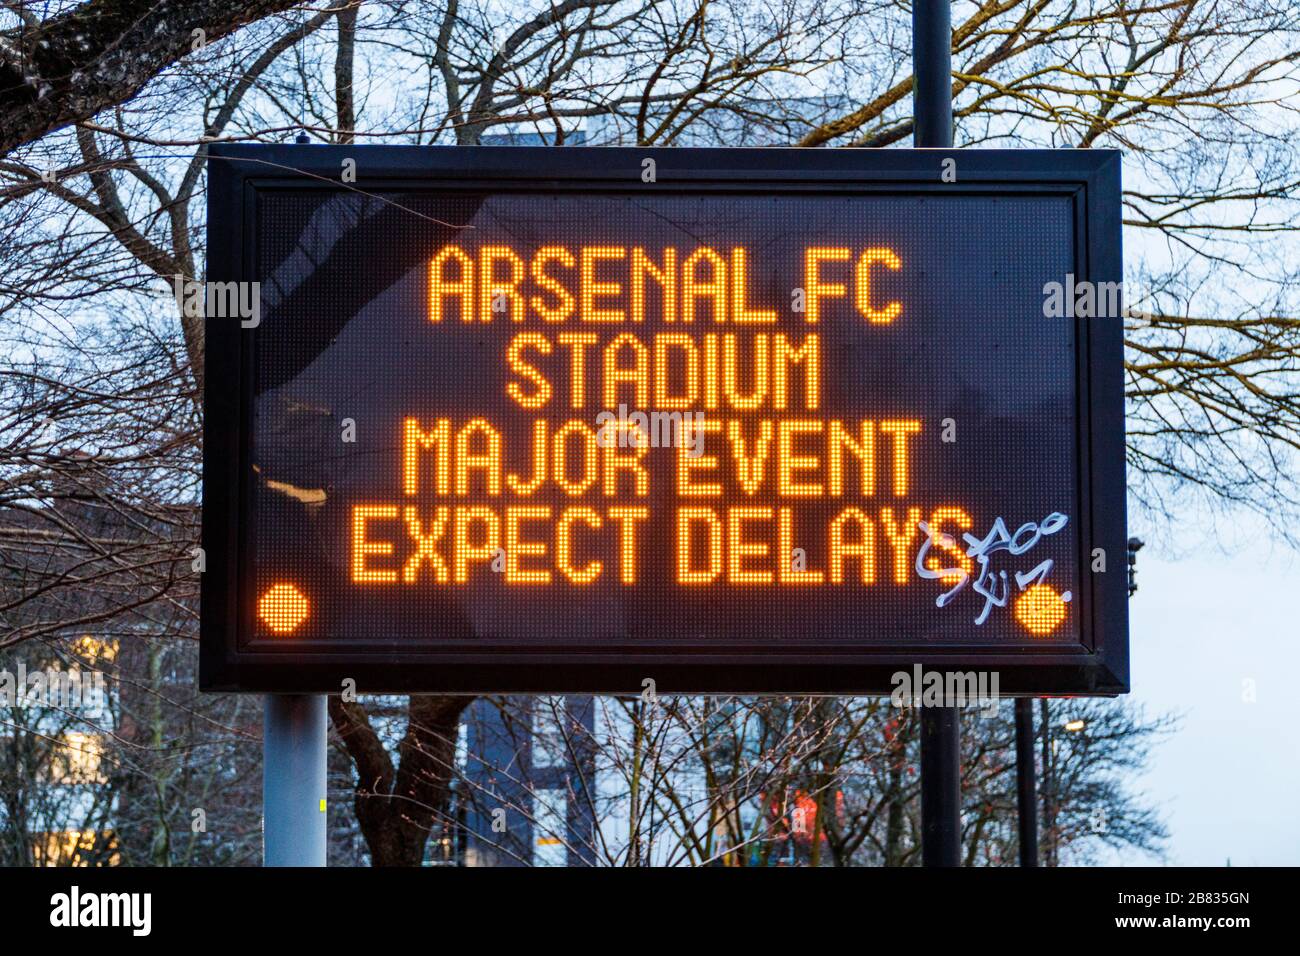 Illuminated dot matrix display warning of delays due to Arsenal FC event, Archway Road, London, UK Stock Photo